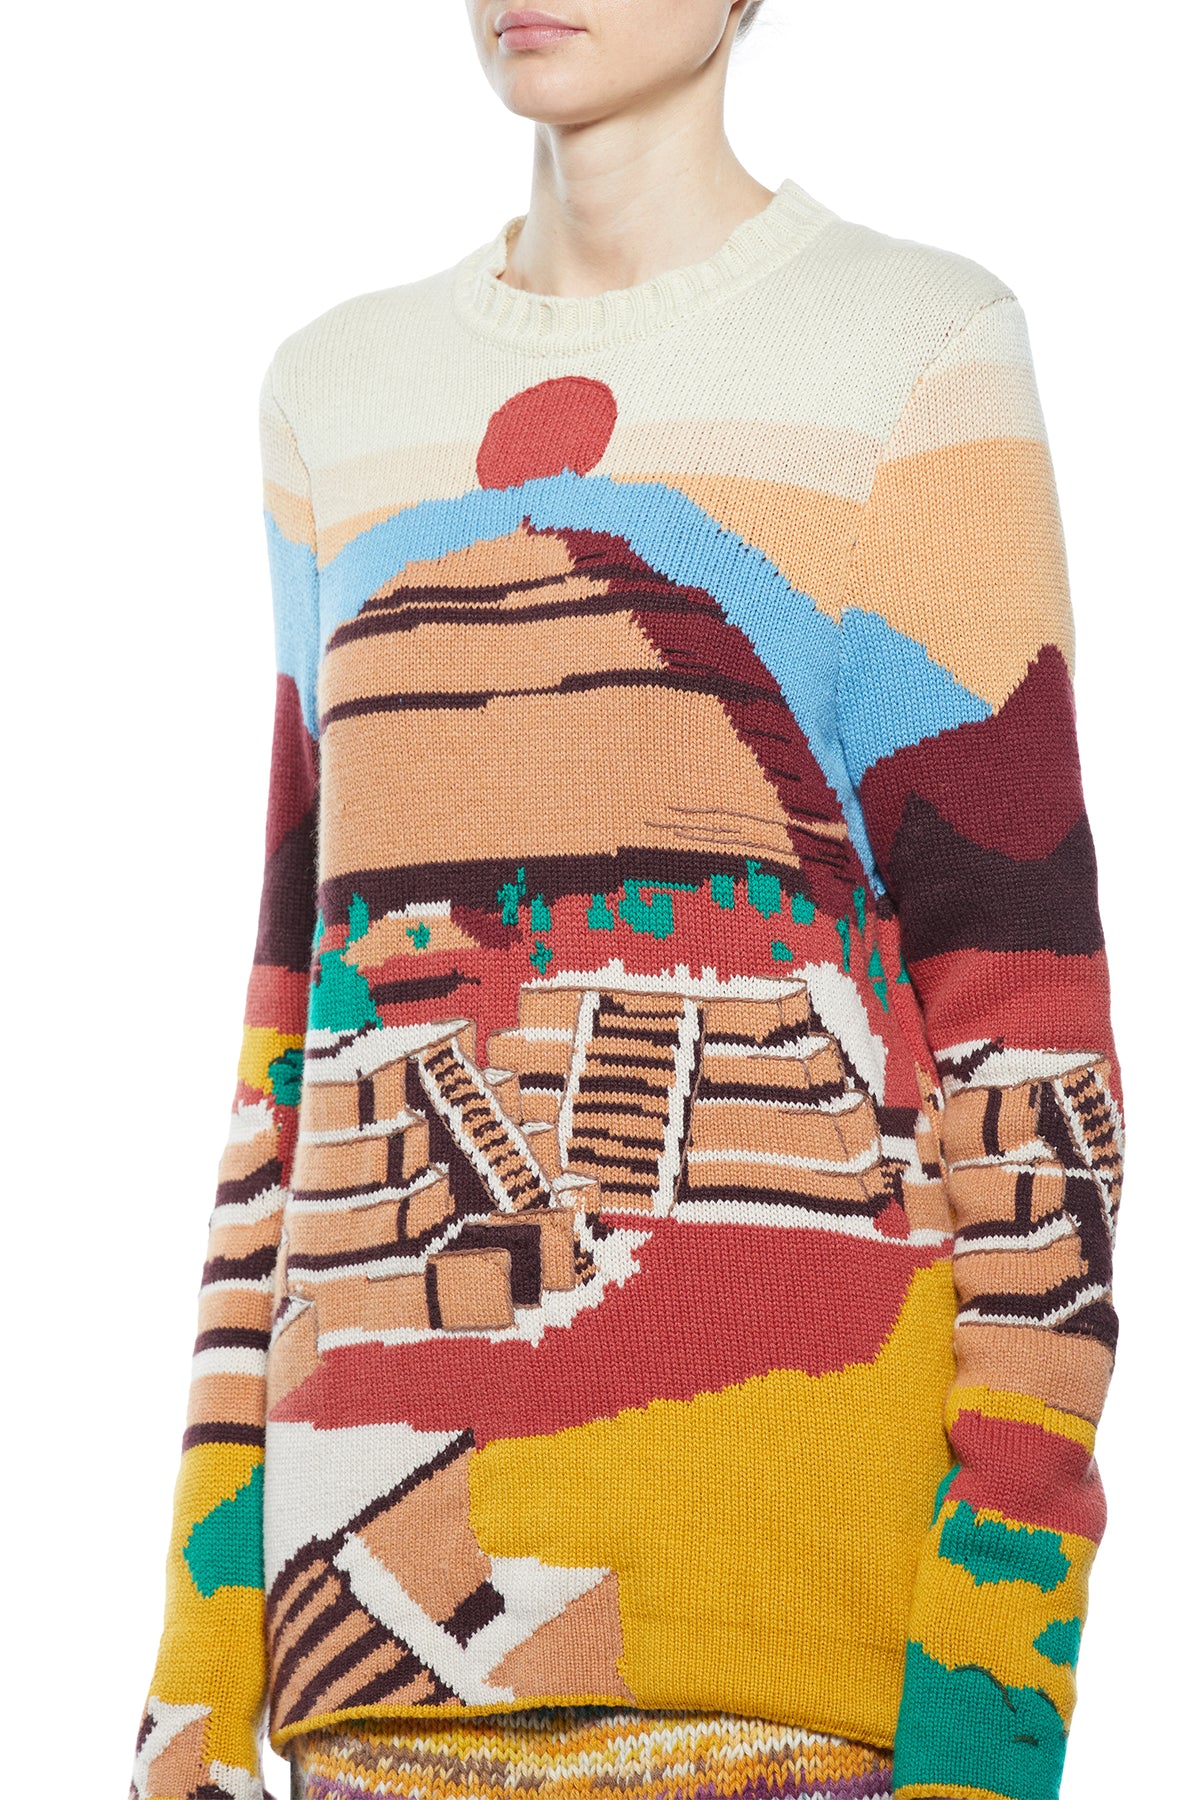 Ines Knit Sweater in Teotihuan Aran Cashmere